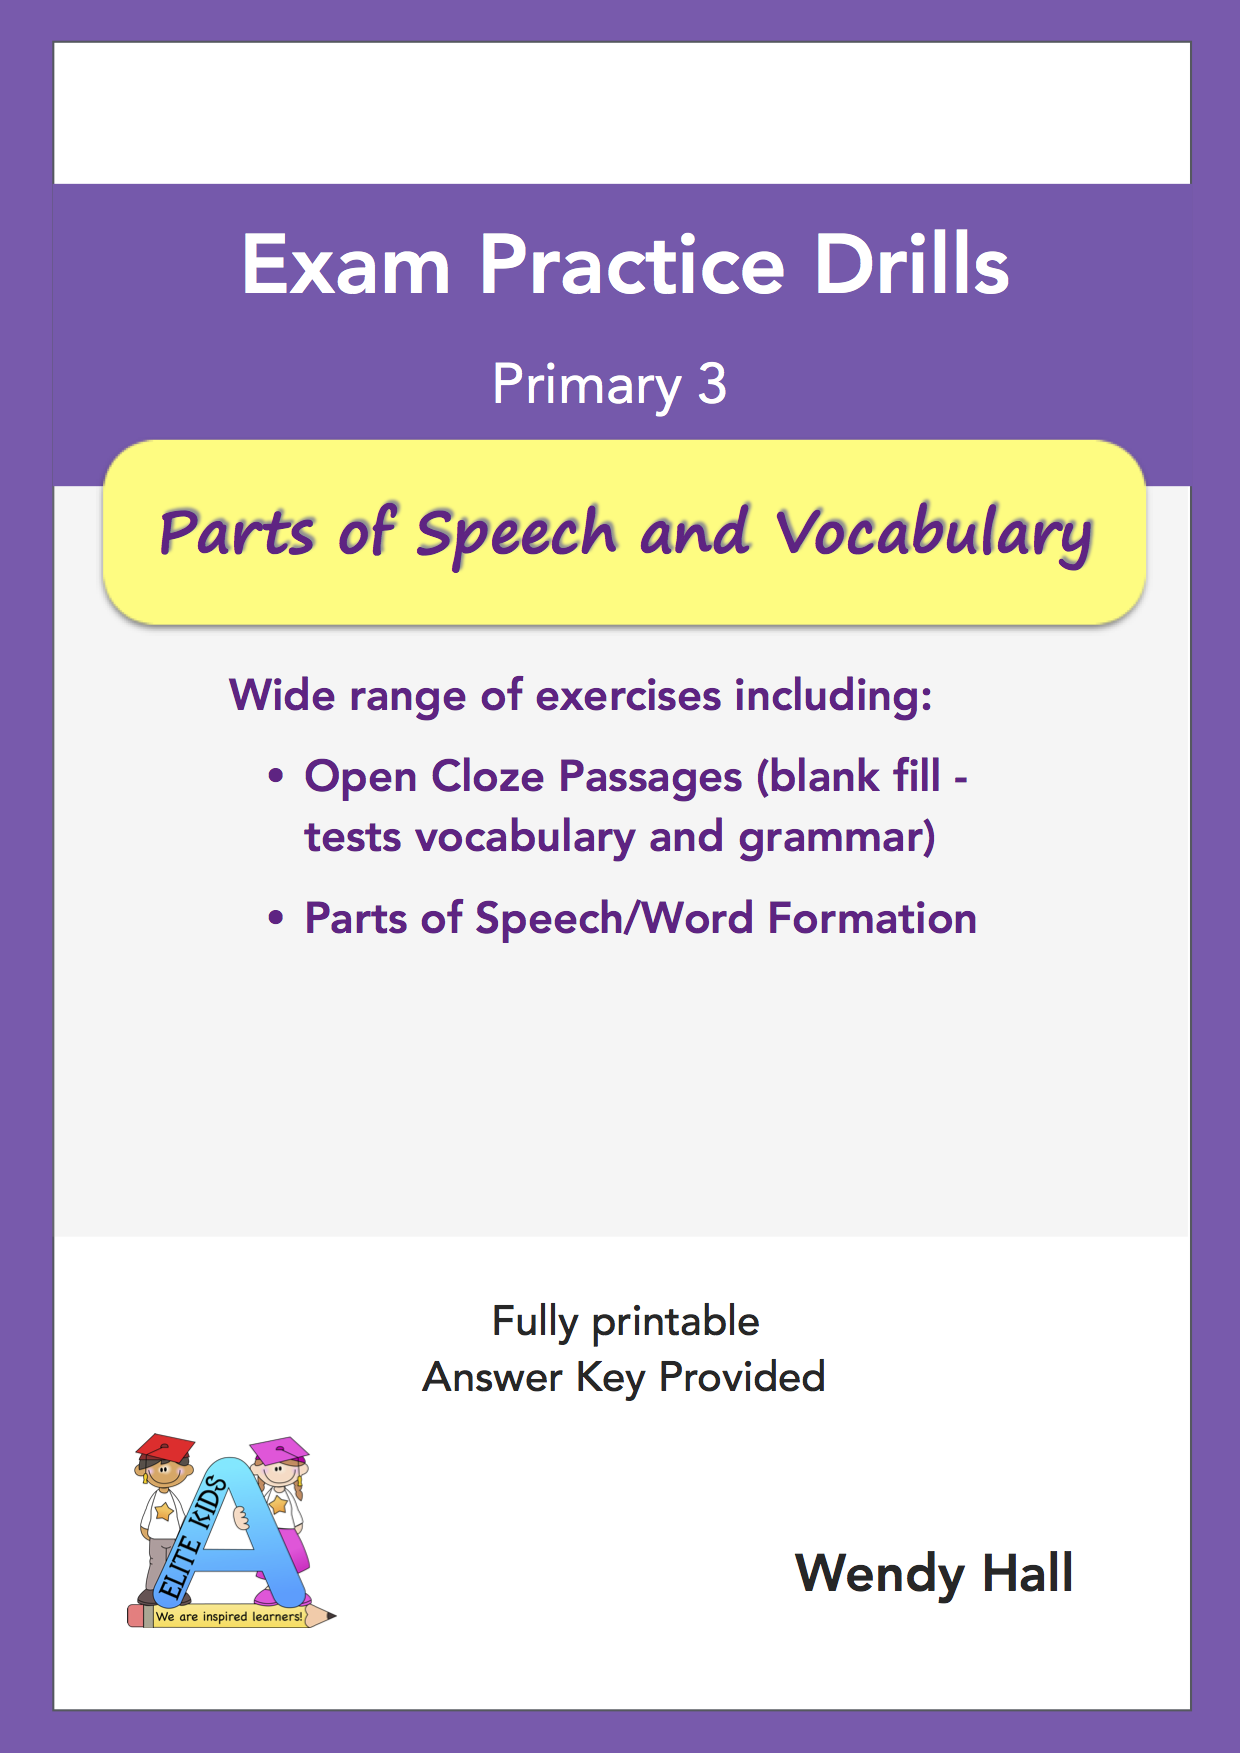 Elite Kids | Exam Practice Drills - Parts of speech and Vocabulary - Primary 3